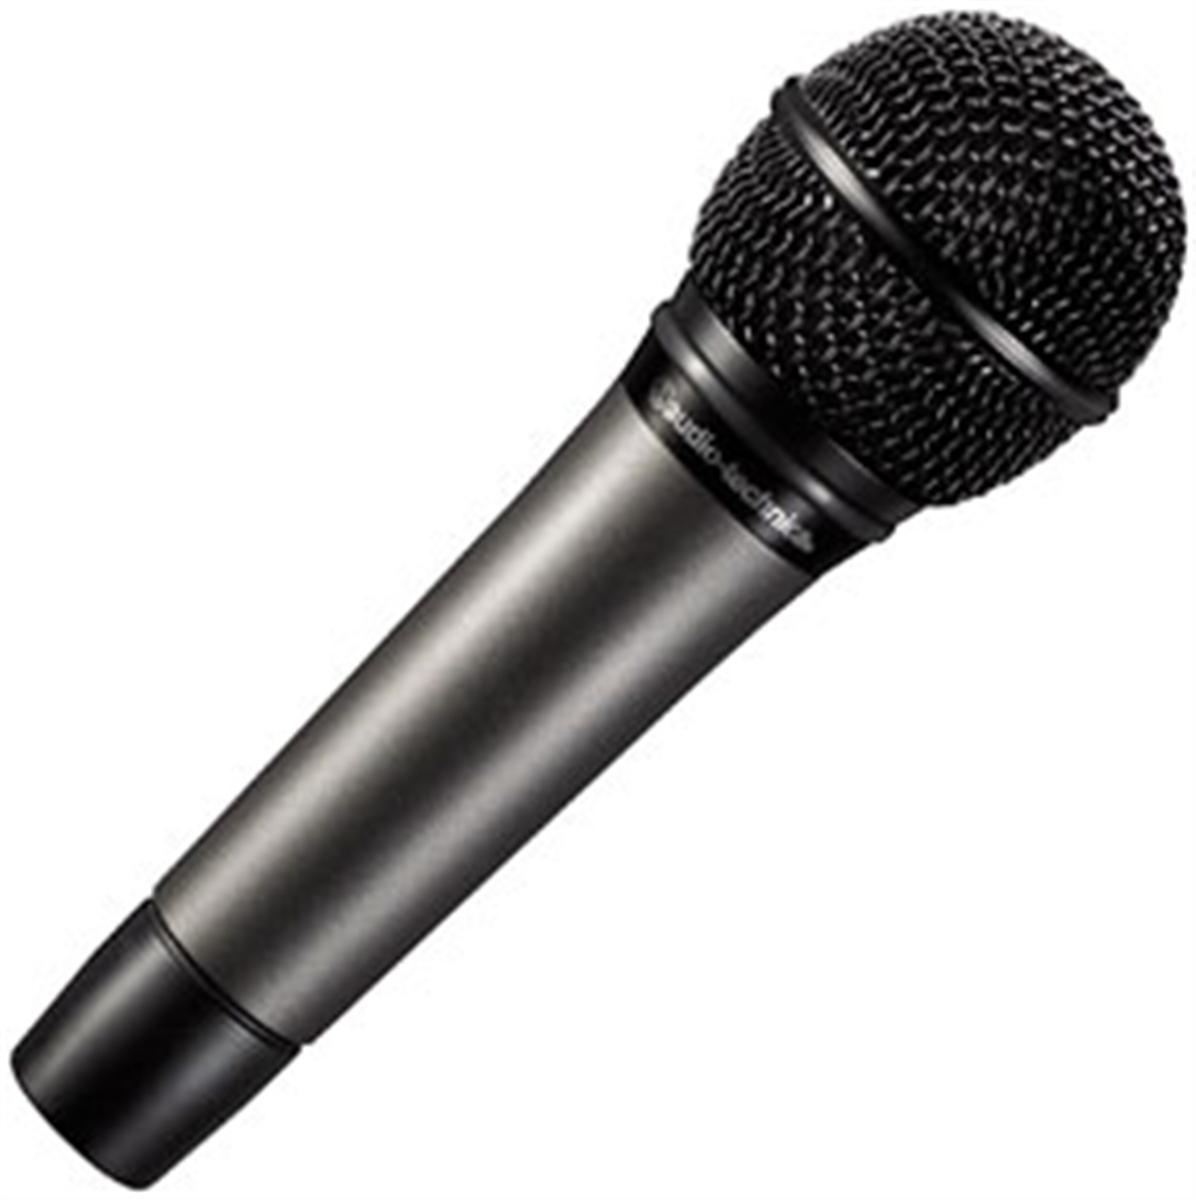 Microphone #22